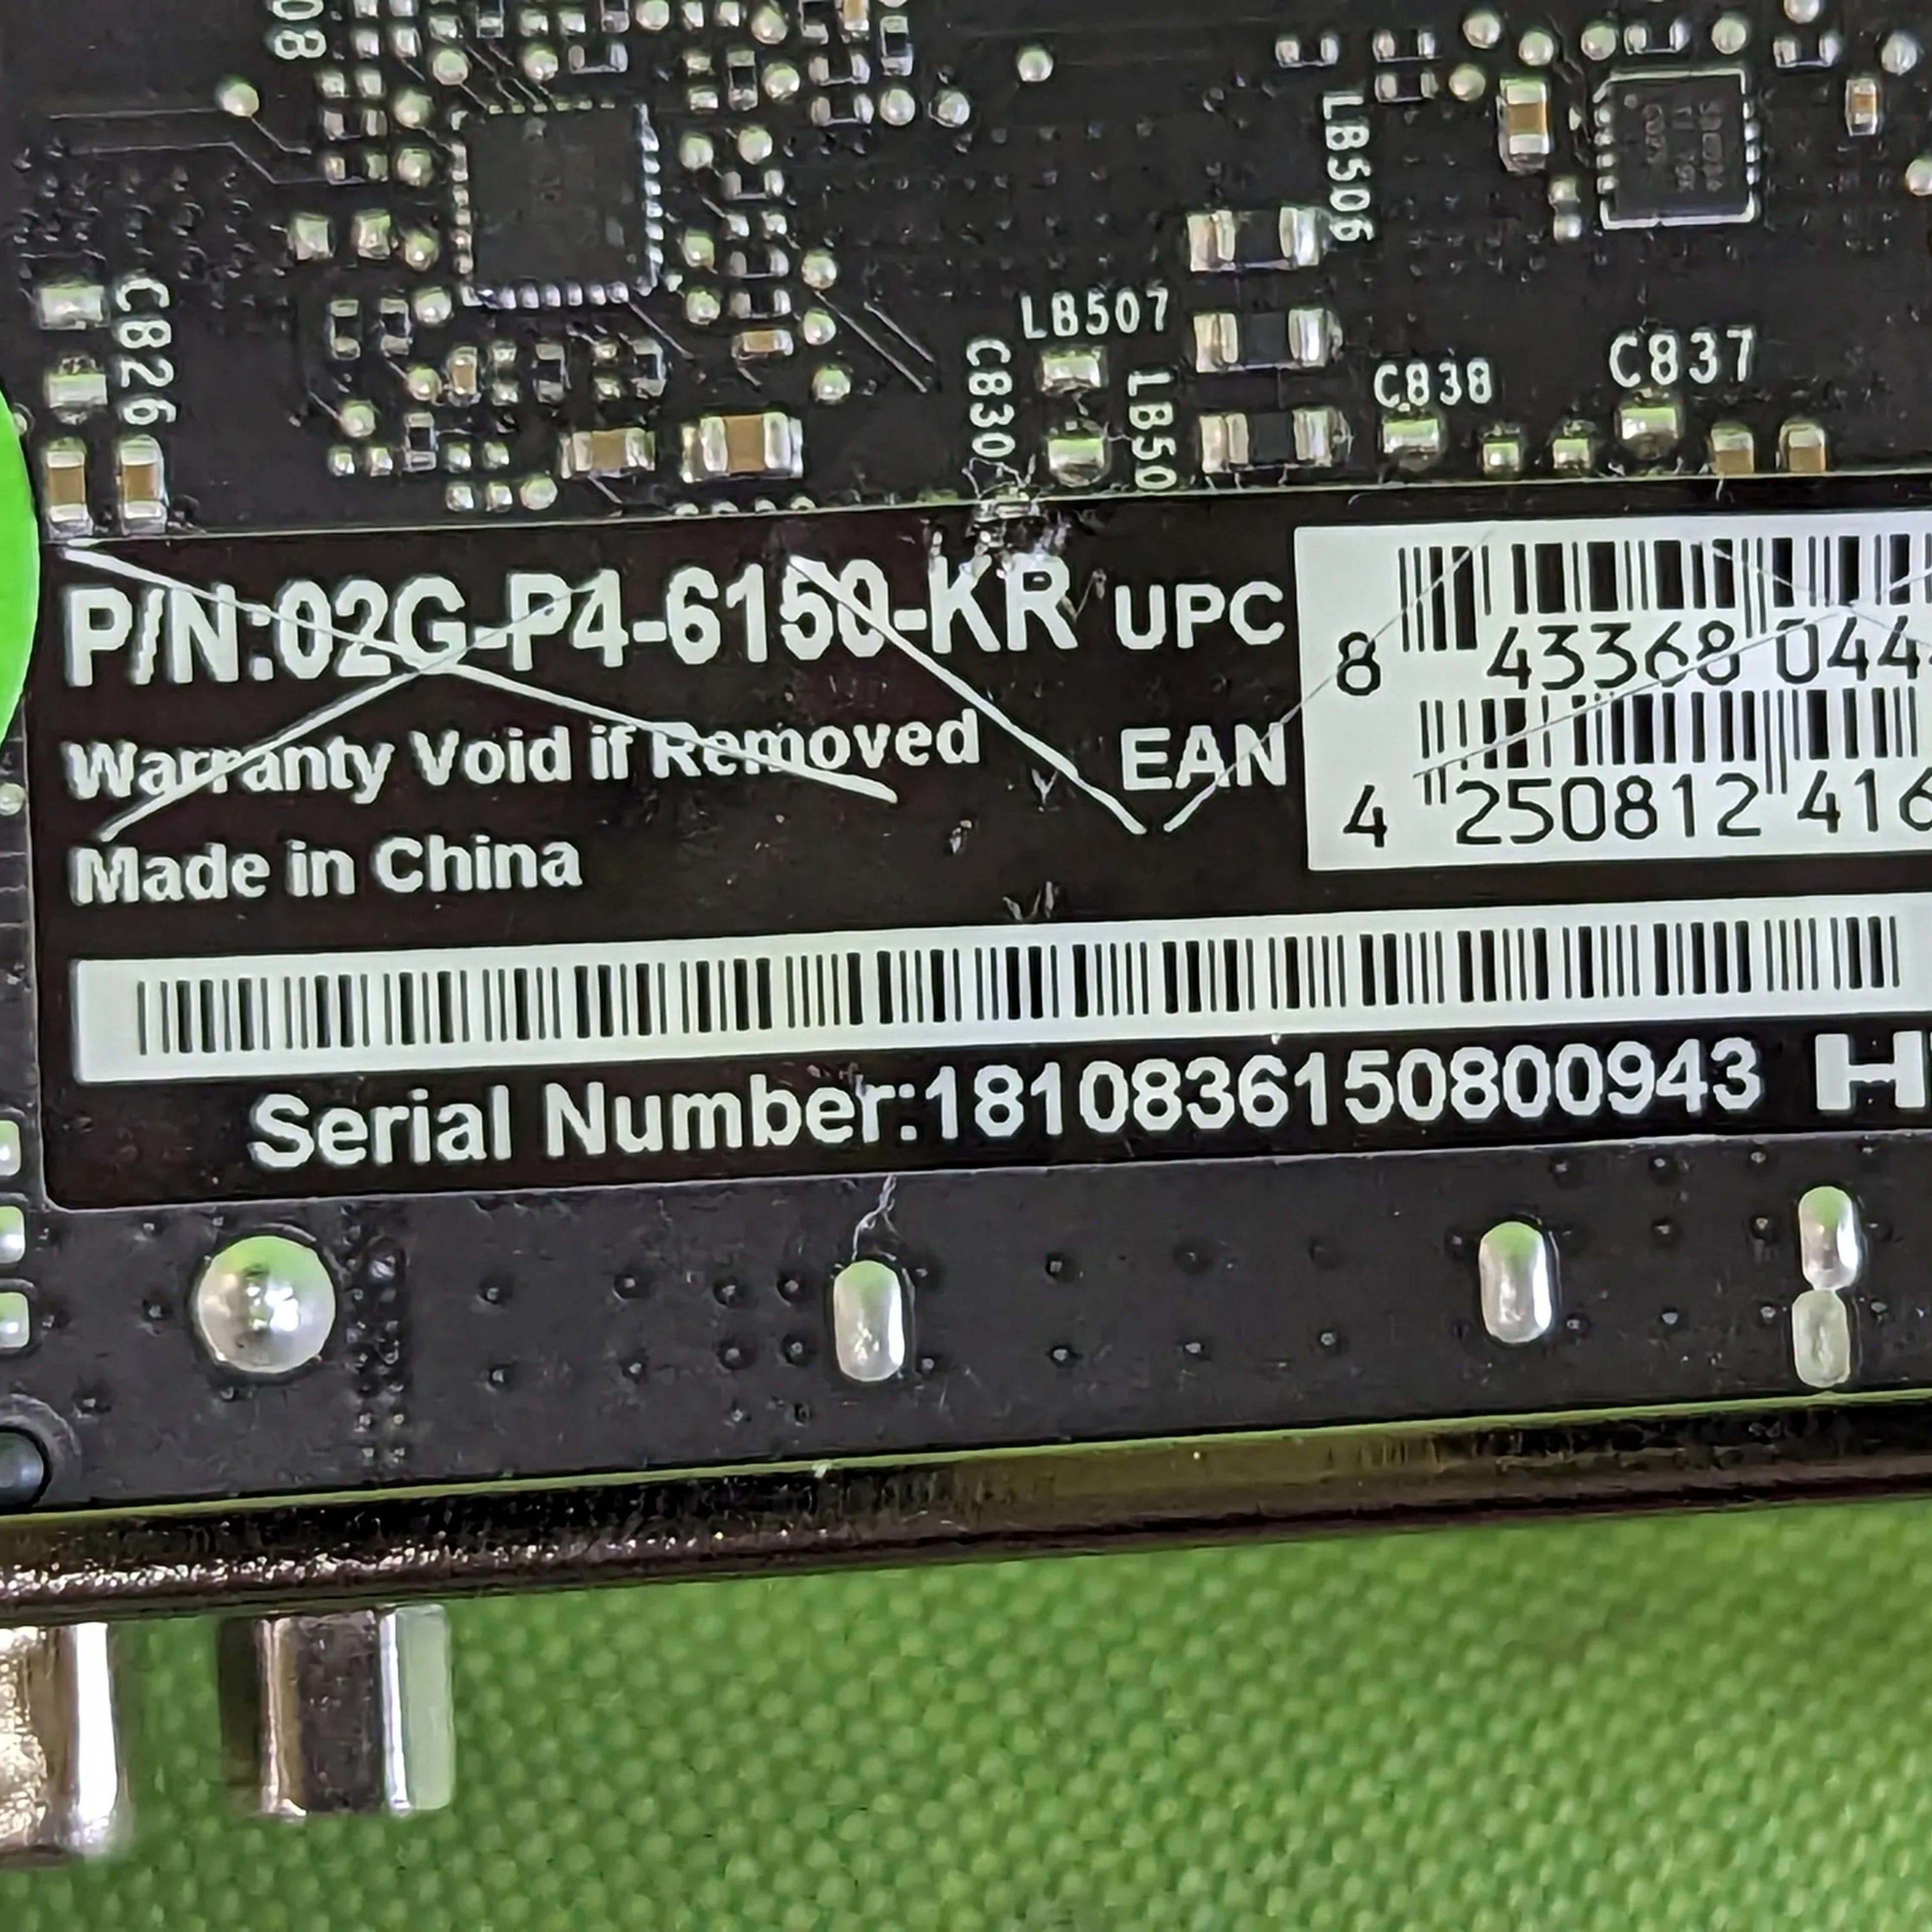 EVGA Geforce GTX 1050 (02G-P4-6150-KR) 2GB Graphics Card